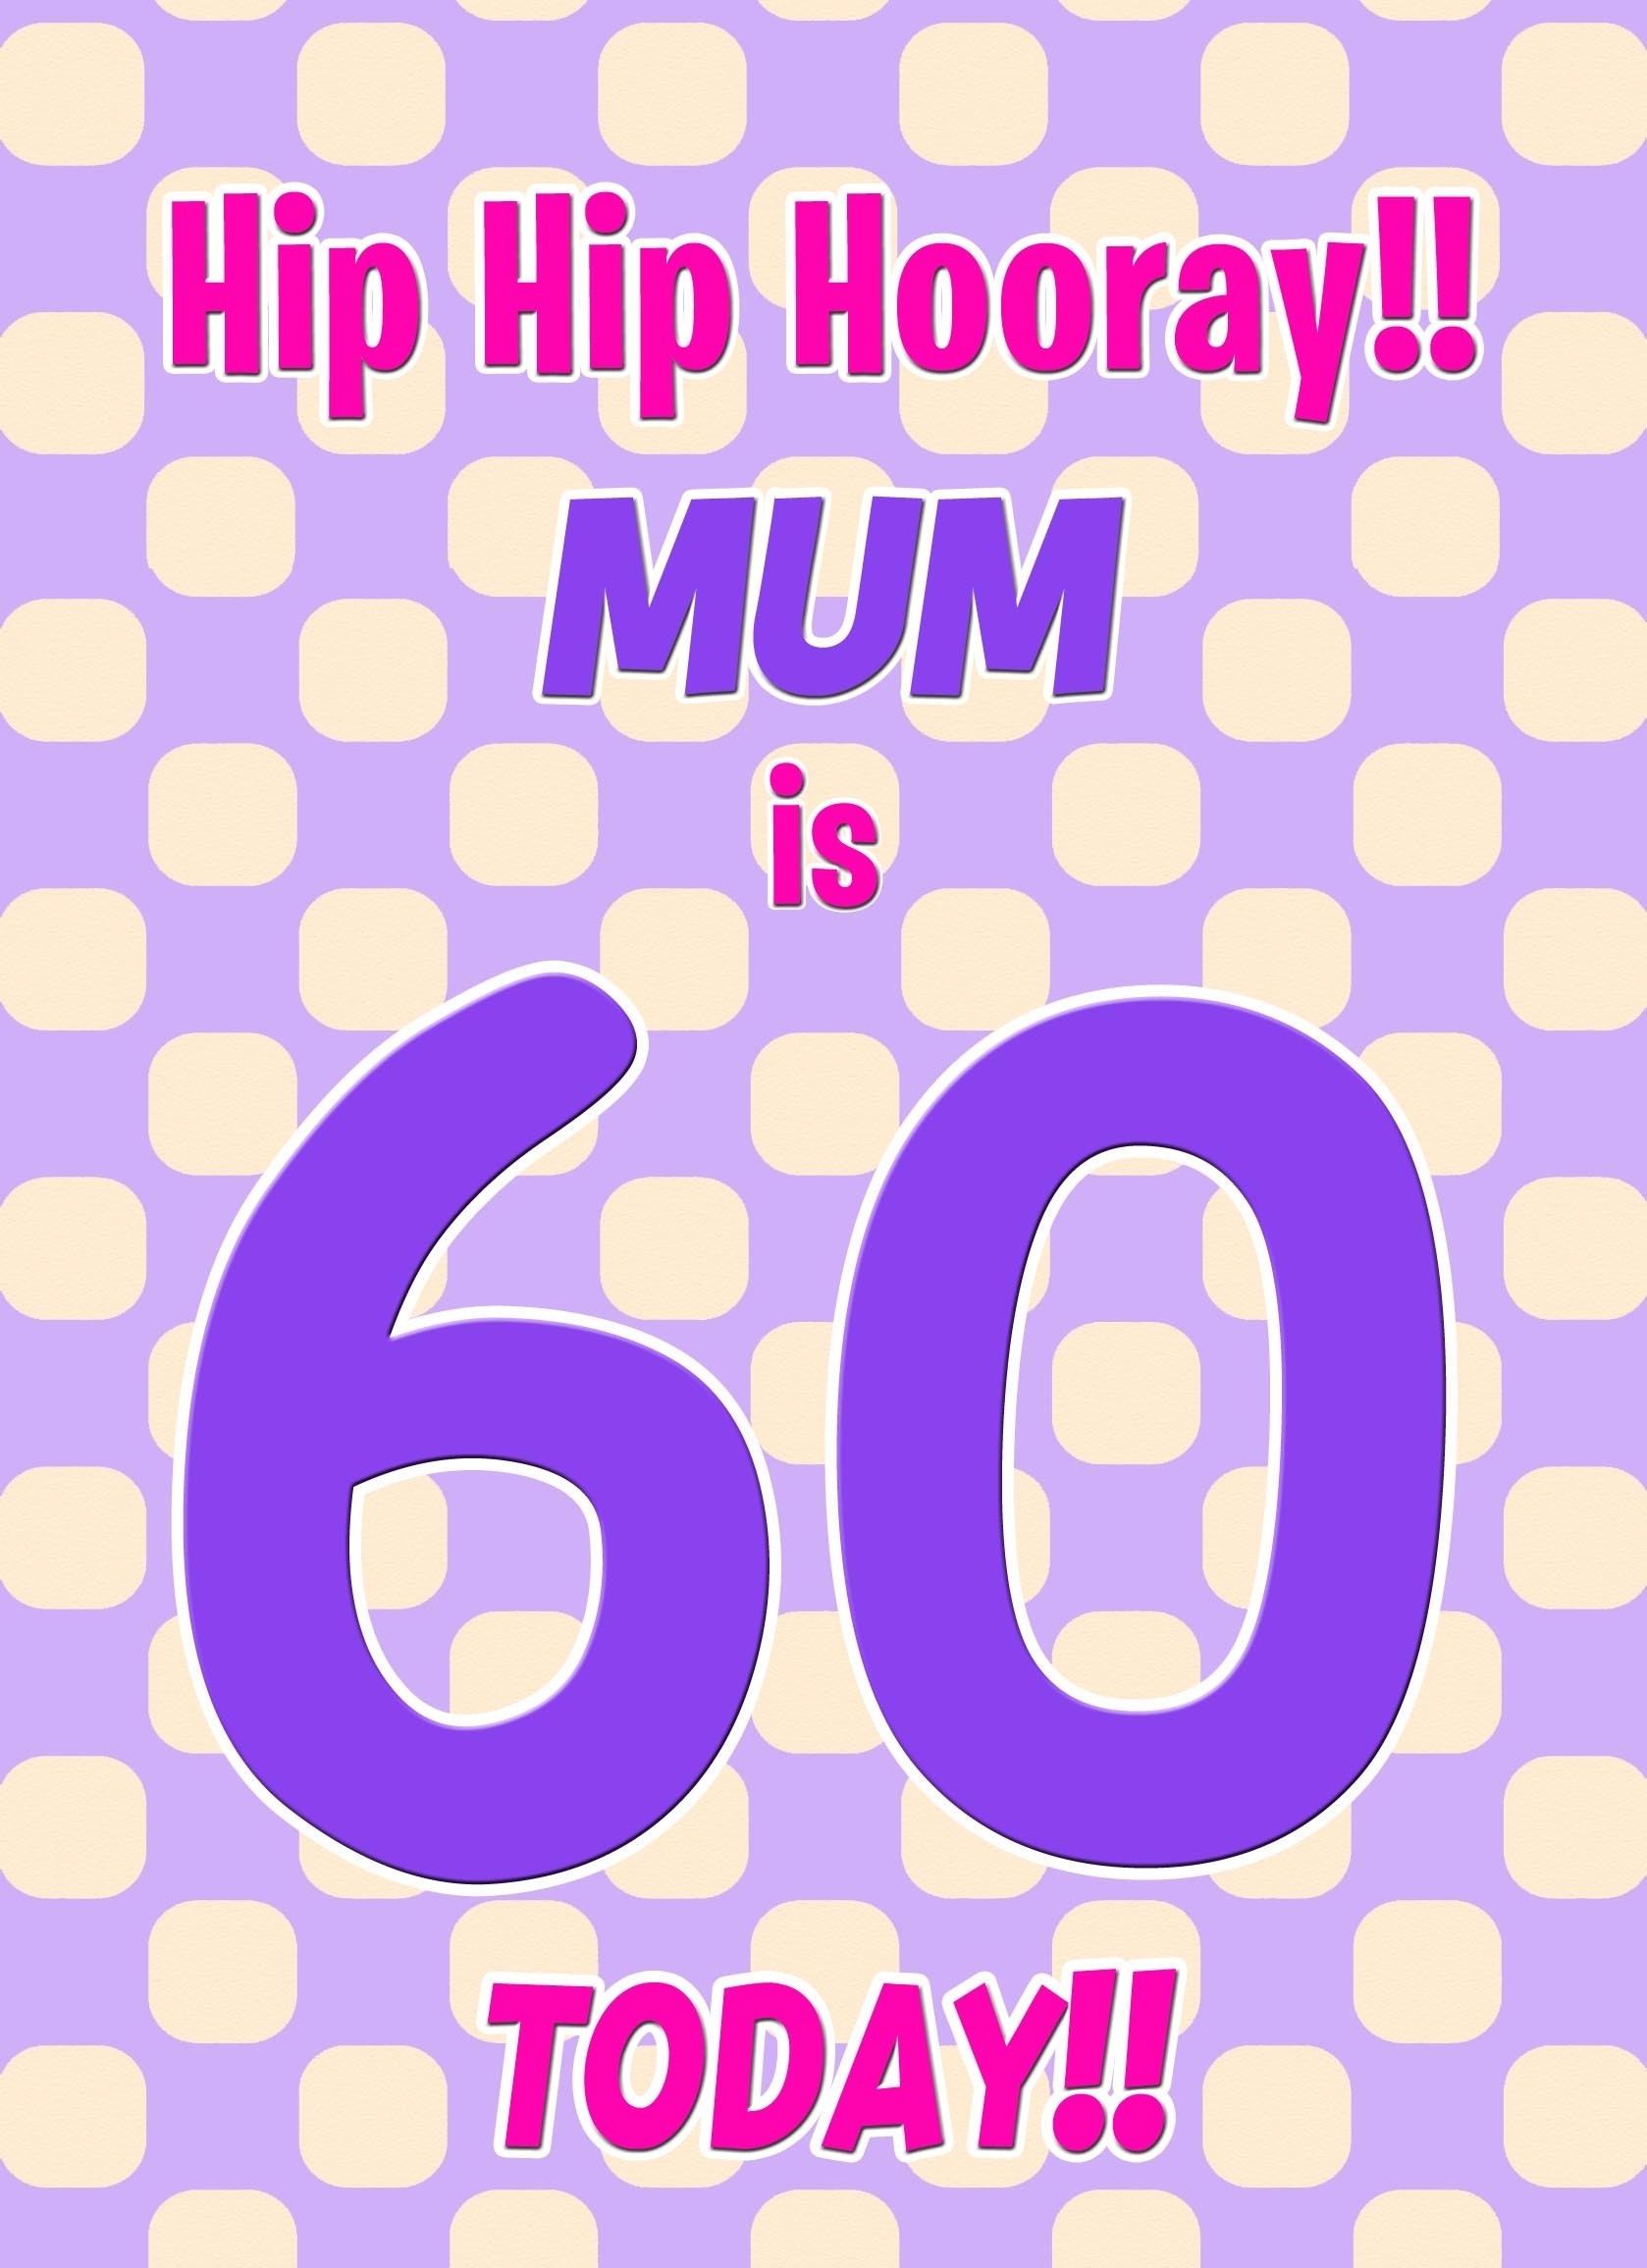 Mum 60th Birthday Card (Purple Spots)